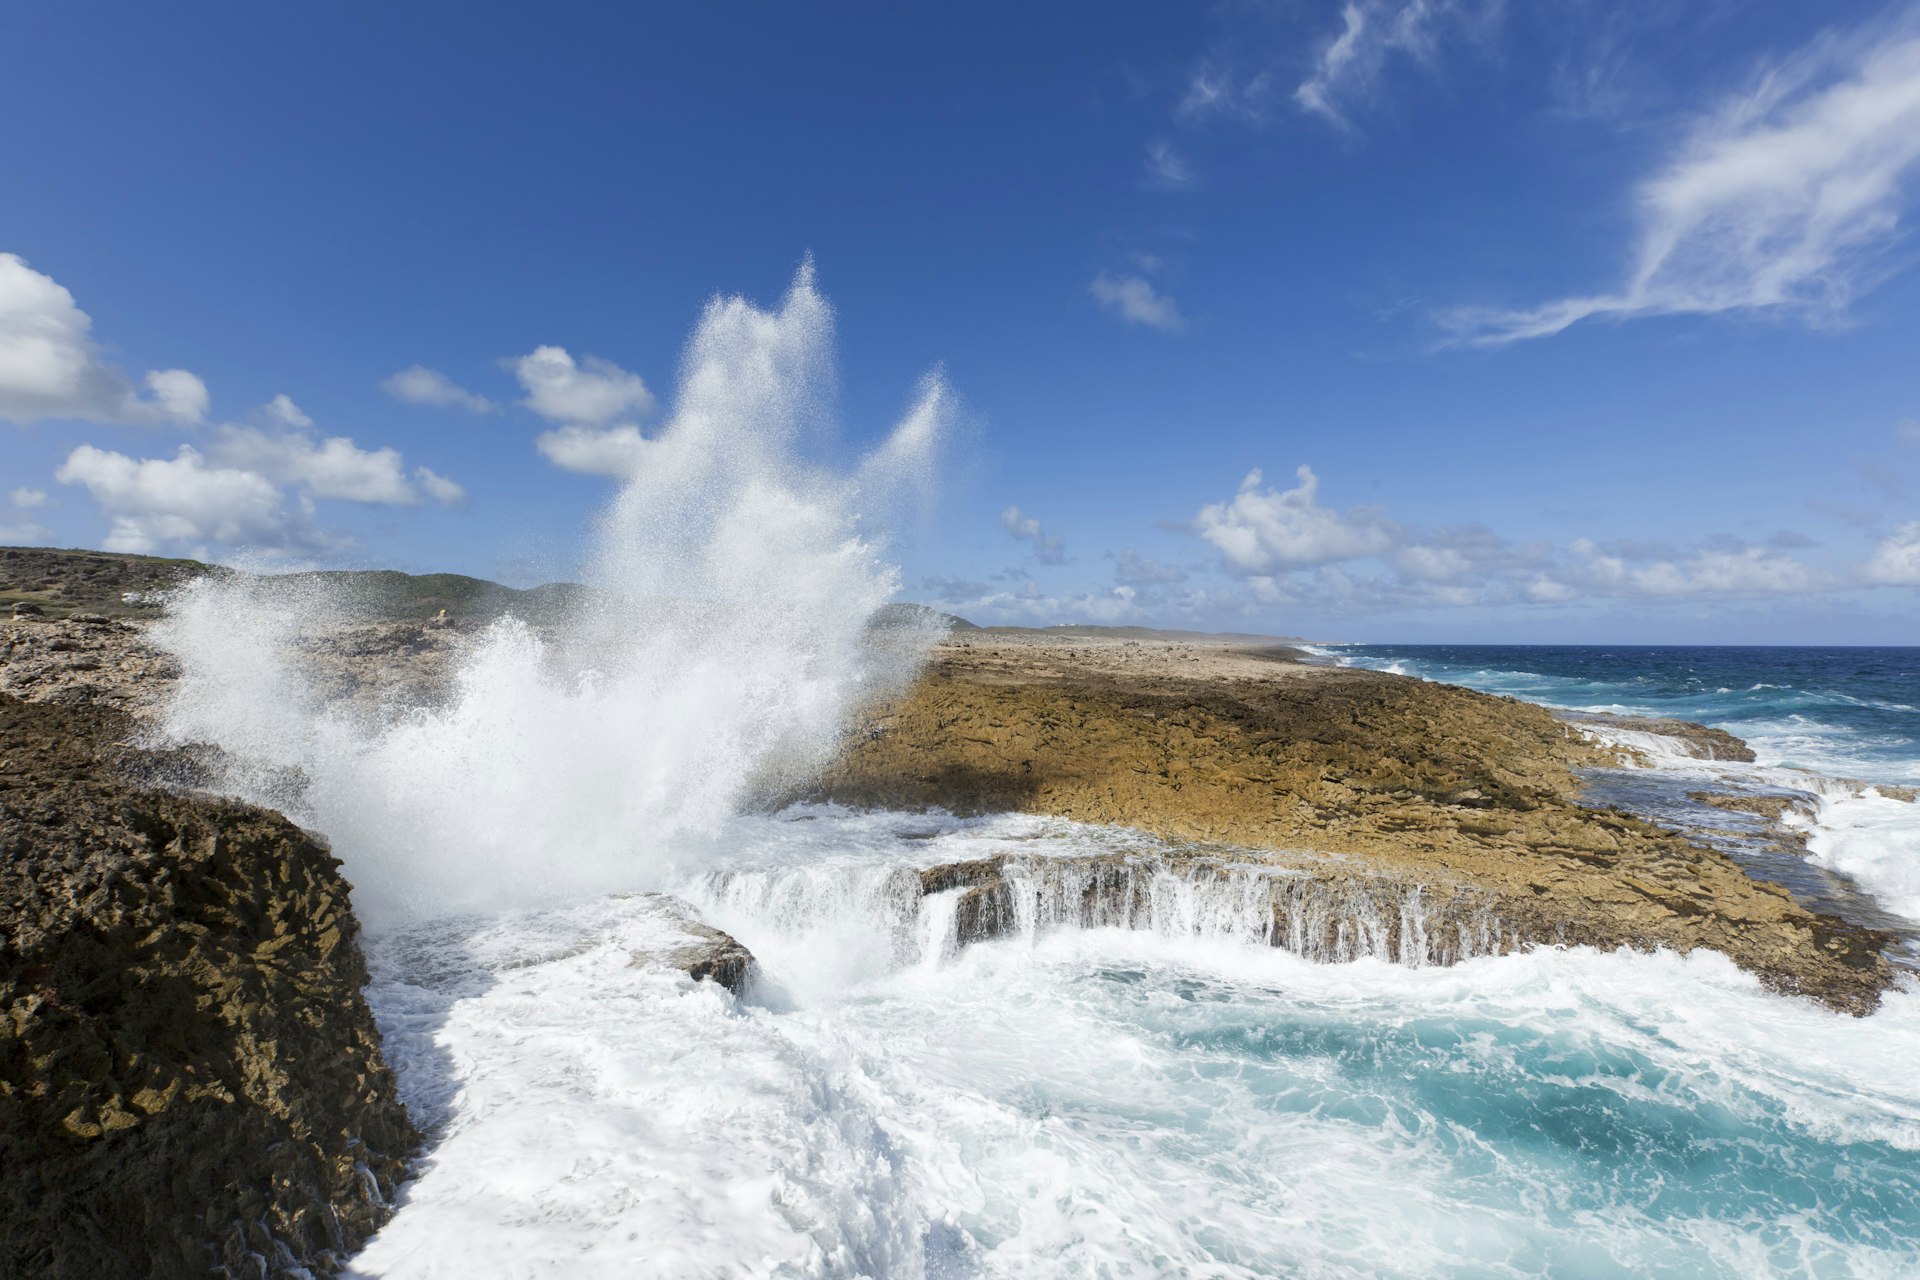 Waves crashing on the rocks at Shete Boka National Park, Curacao